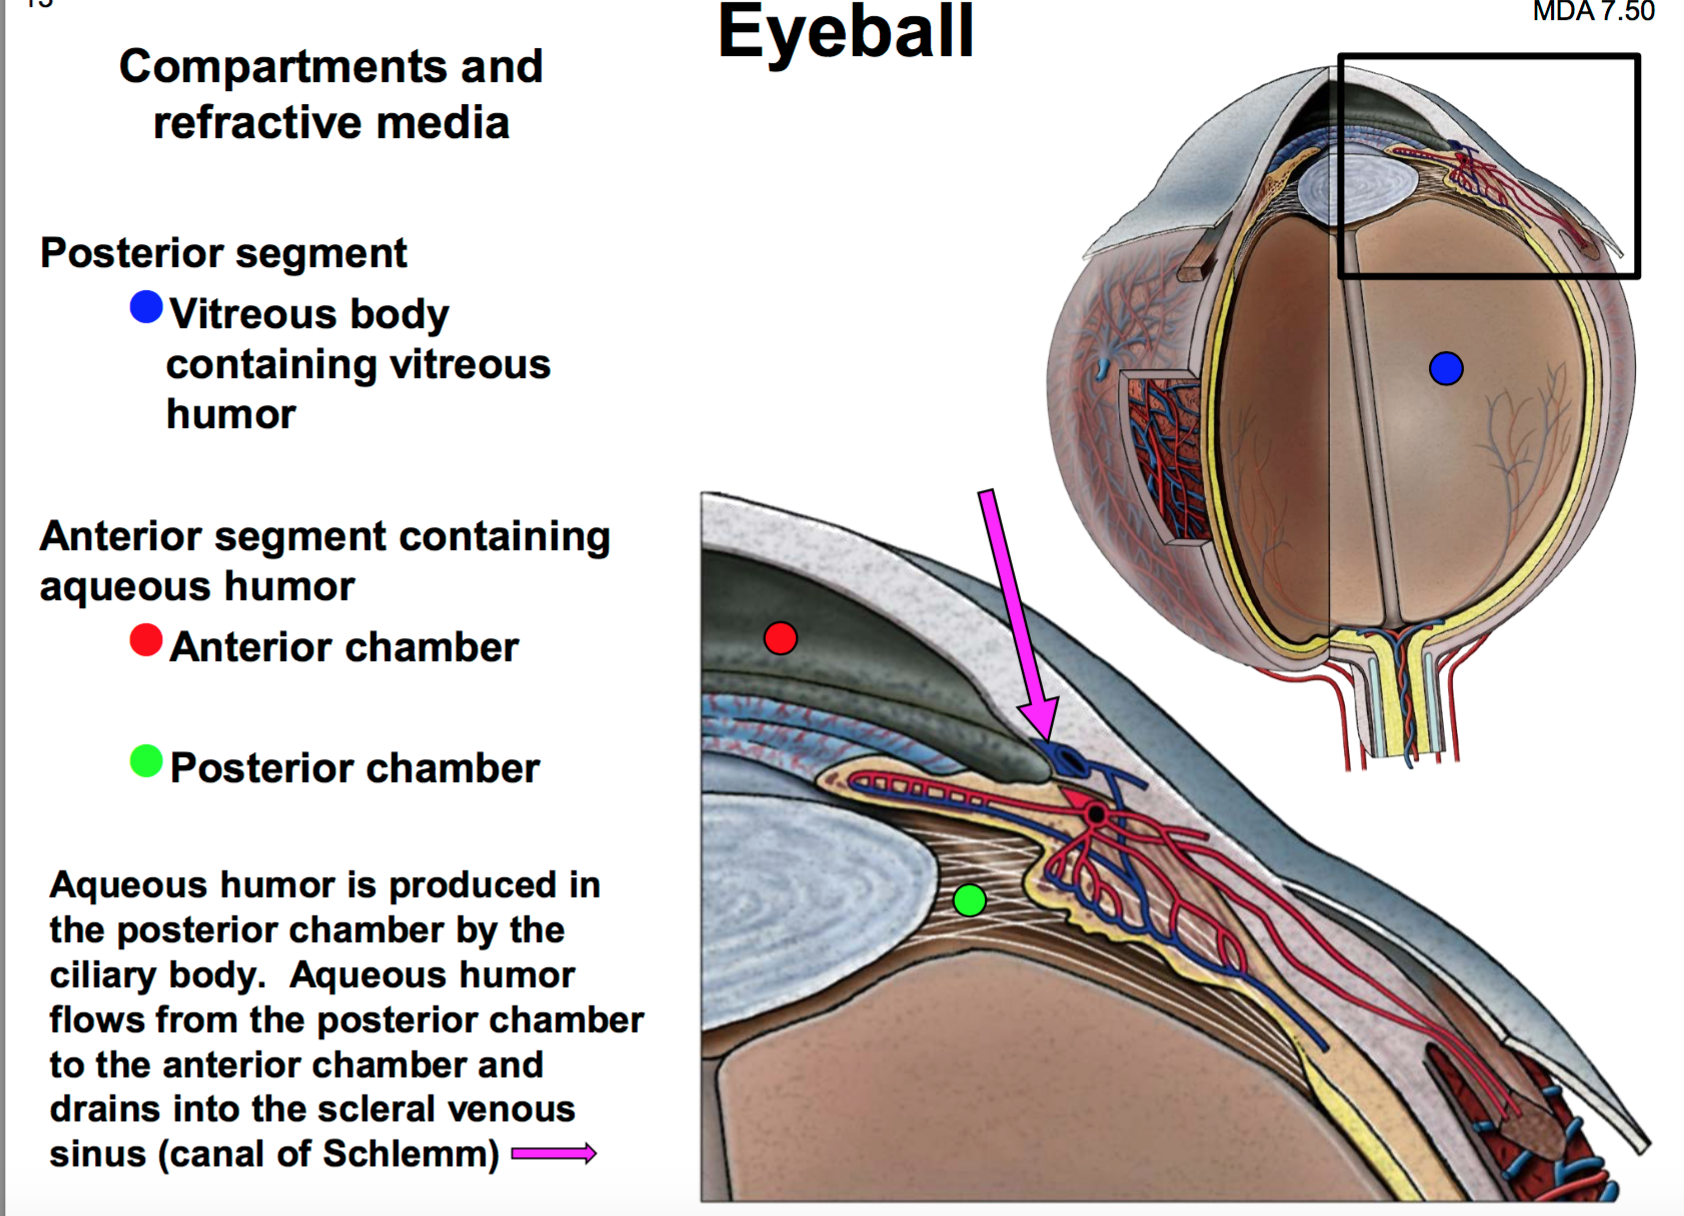 scleral venous sinus of the eye